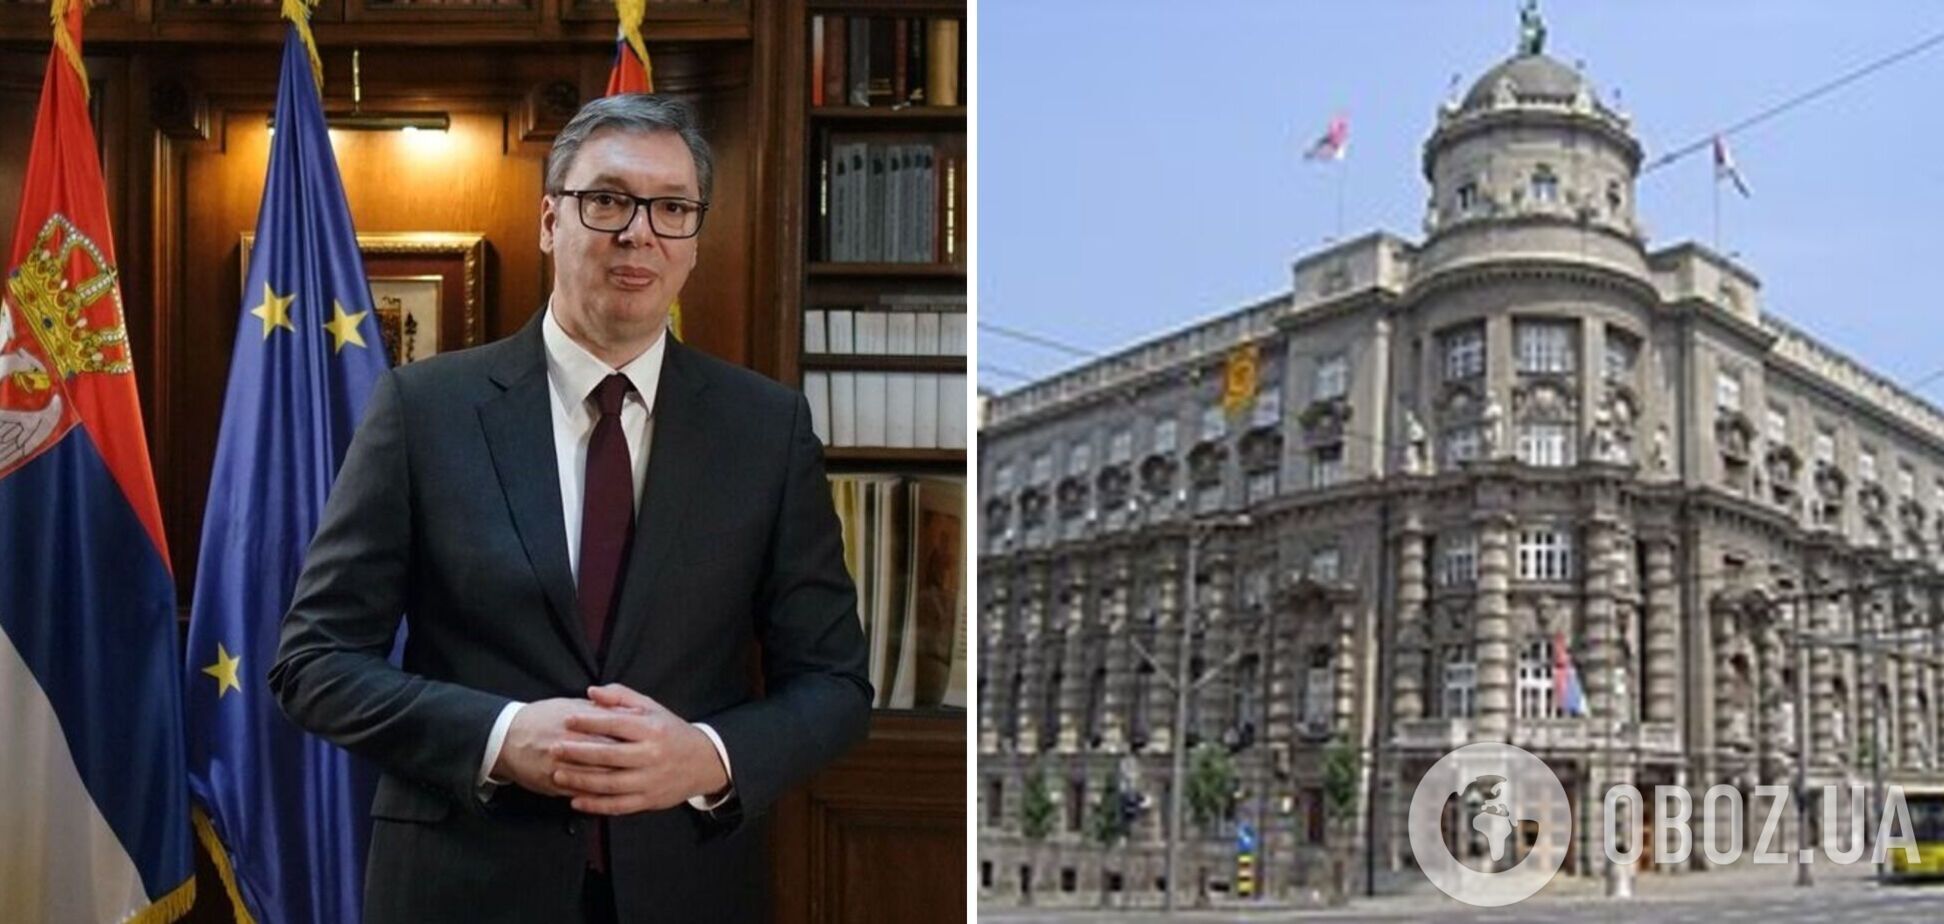 Президент Сербии объявил о роспуске парламента: названа дата досрочных выборов